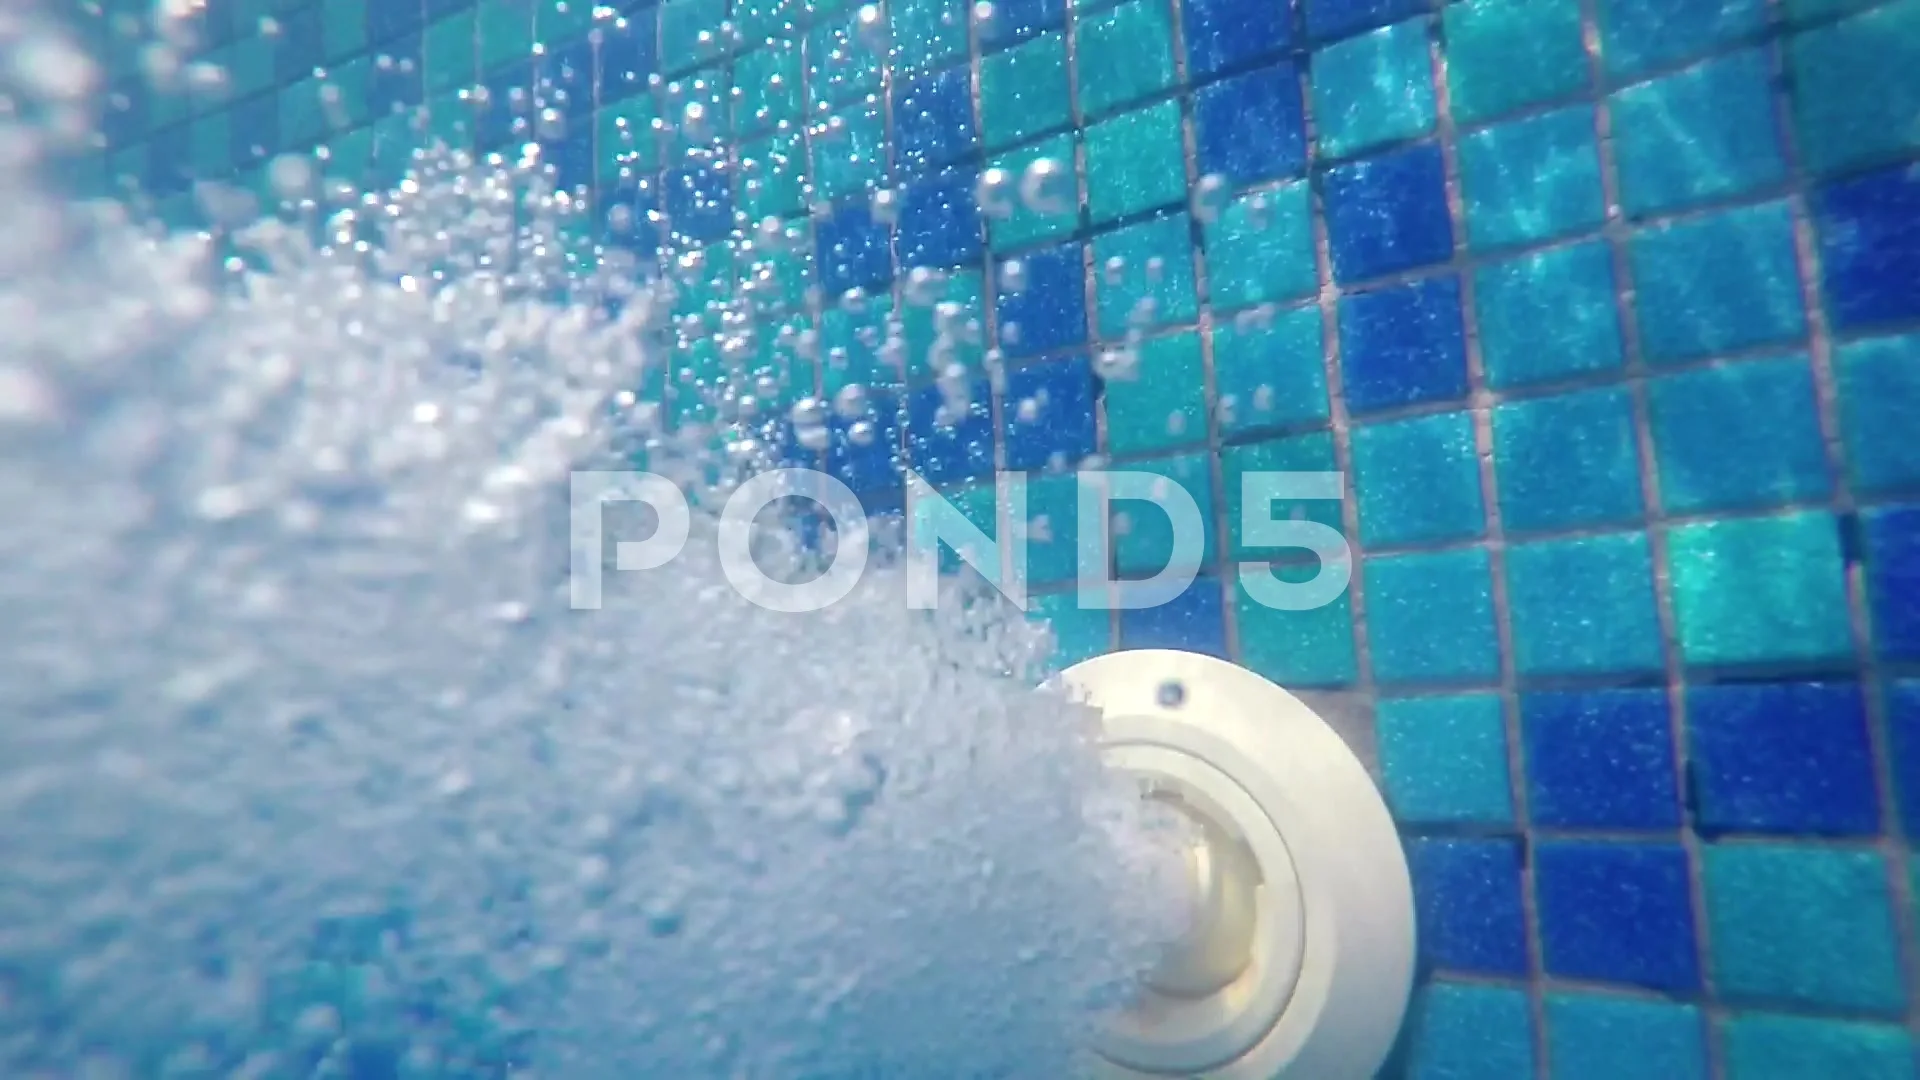 https://images.pond5.com/underwater-bubbles-pool-water-jet-058288318_prevstill.jpeg